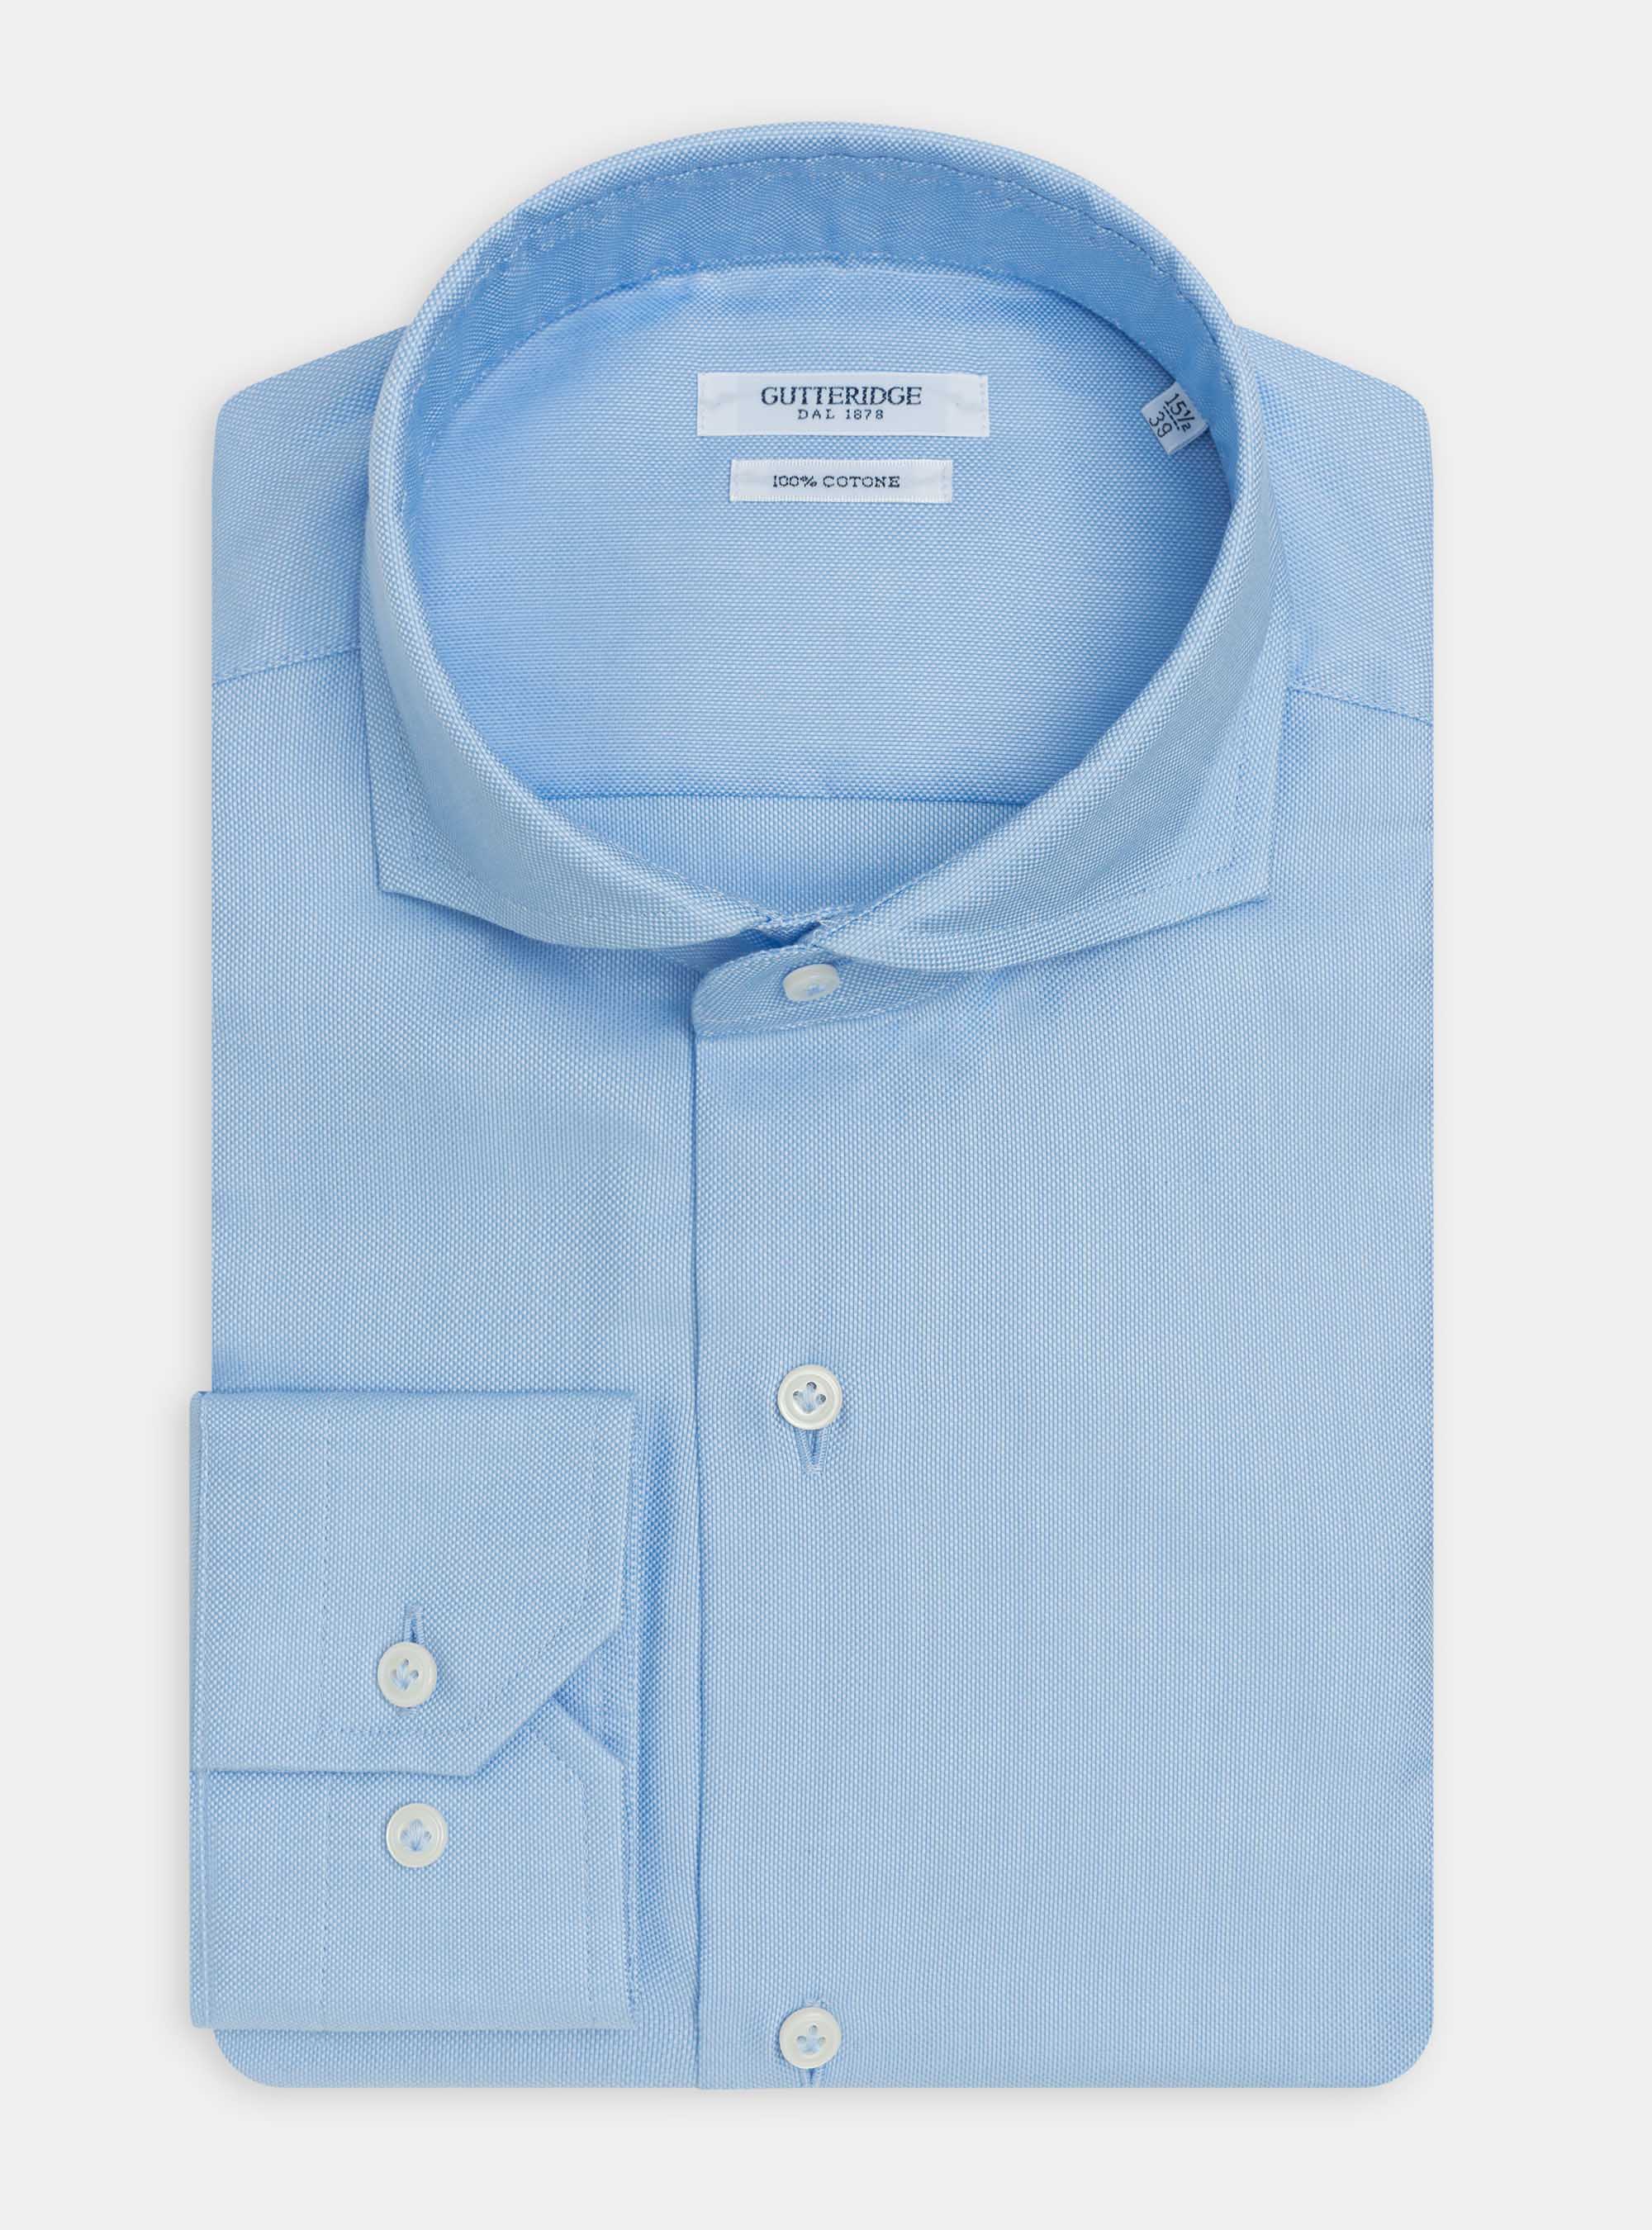 Oxford cotton French collar shirt | Gutteridge | Men's Shirts